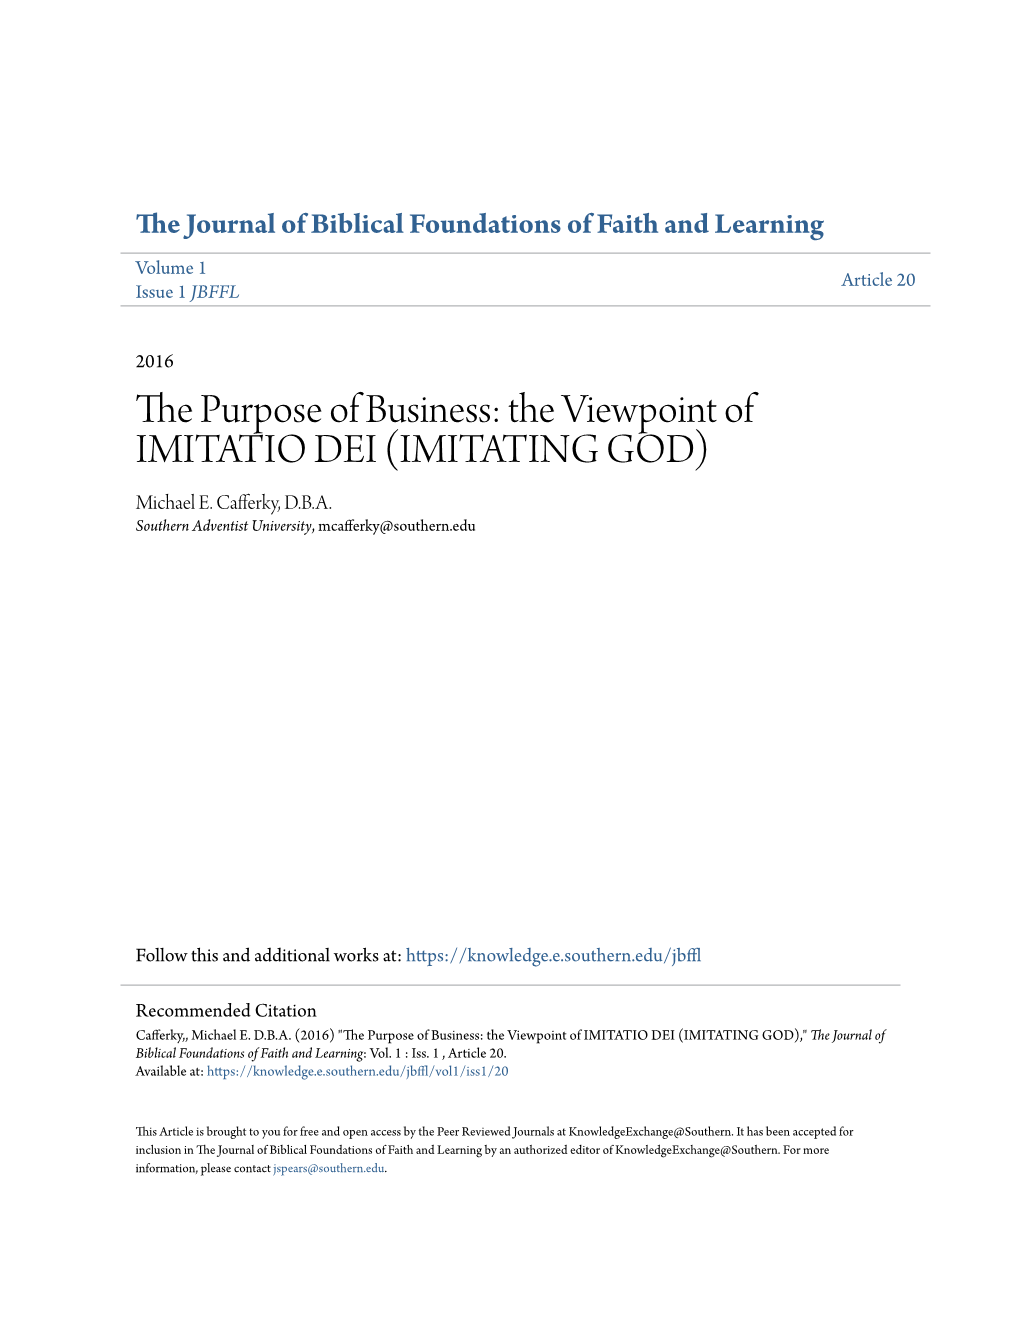 The Purpose of Business: the Viewpoint of IMITATIO DEI (IMITATING GOD) Michael E